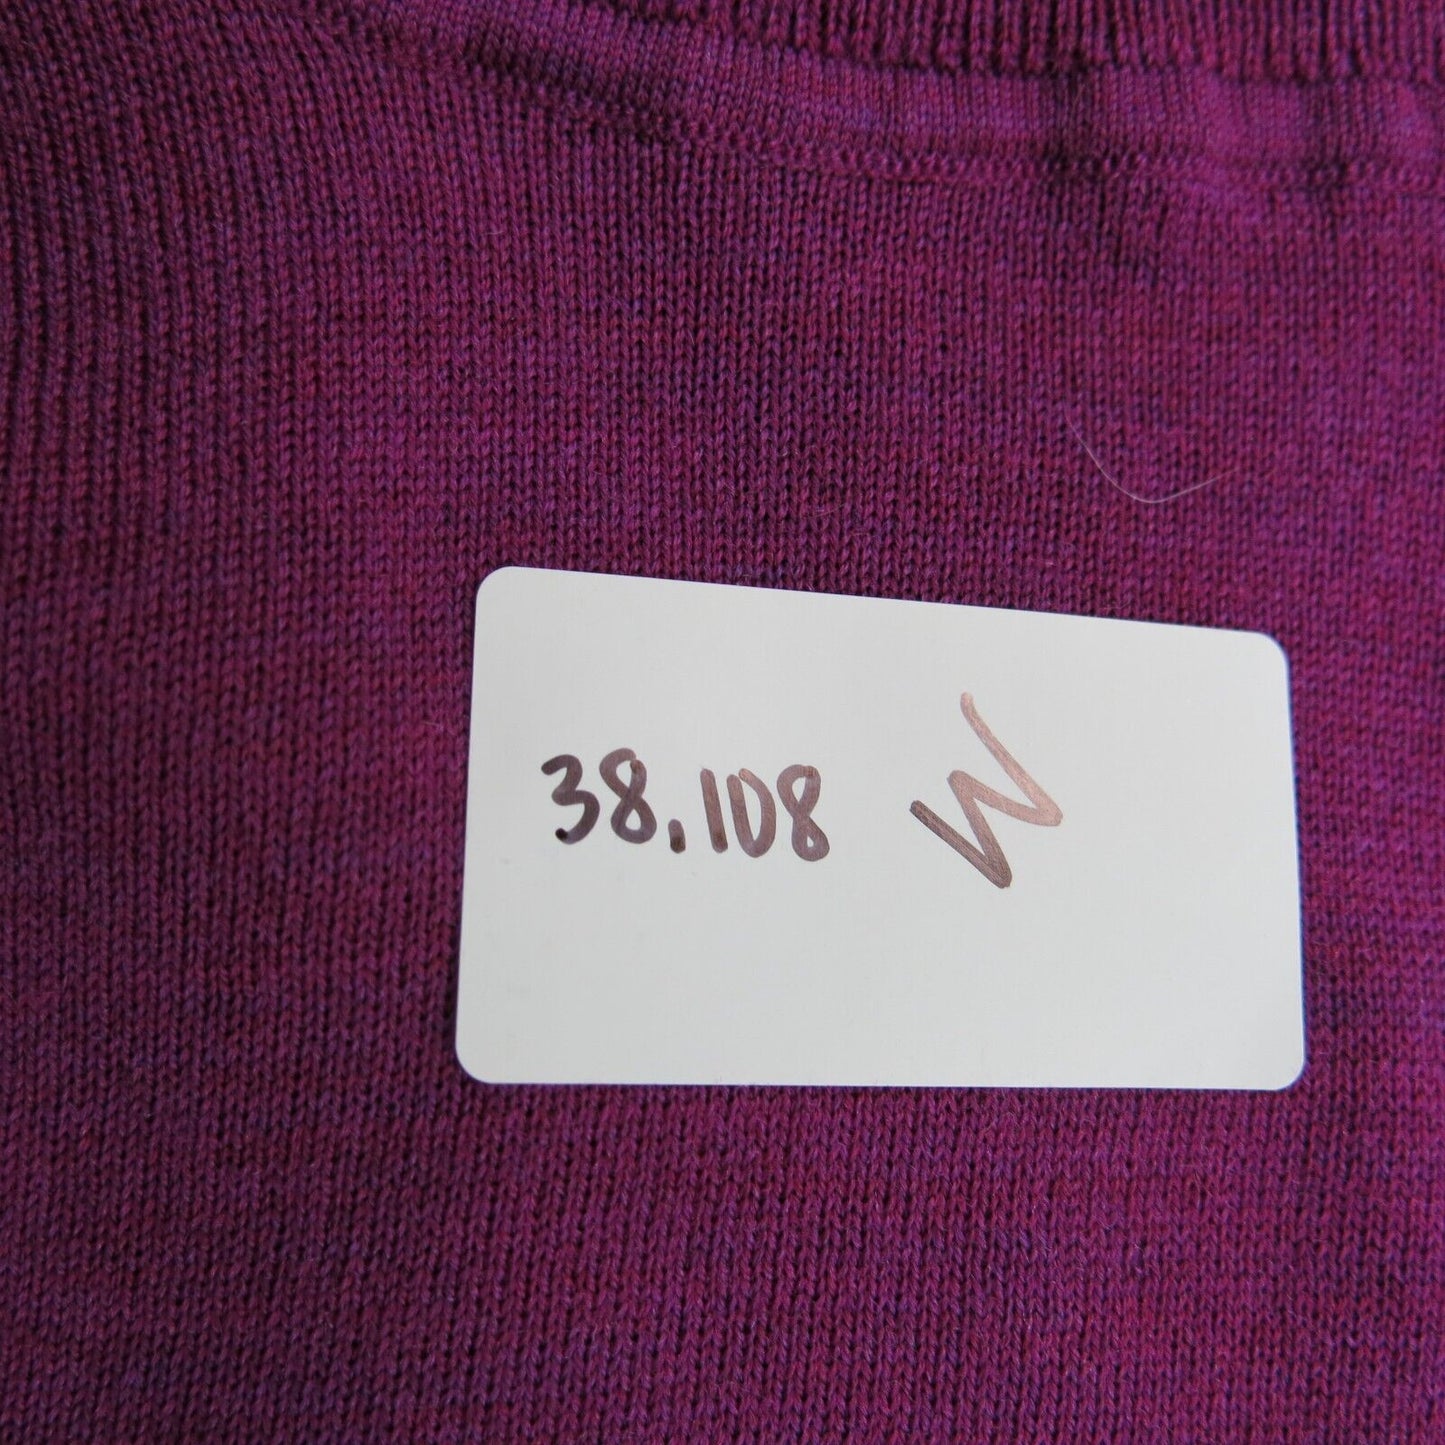 Gap Womens Pullover Knitted Sweater Top 100% Merino Wool Long Sleeve Purple S/P